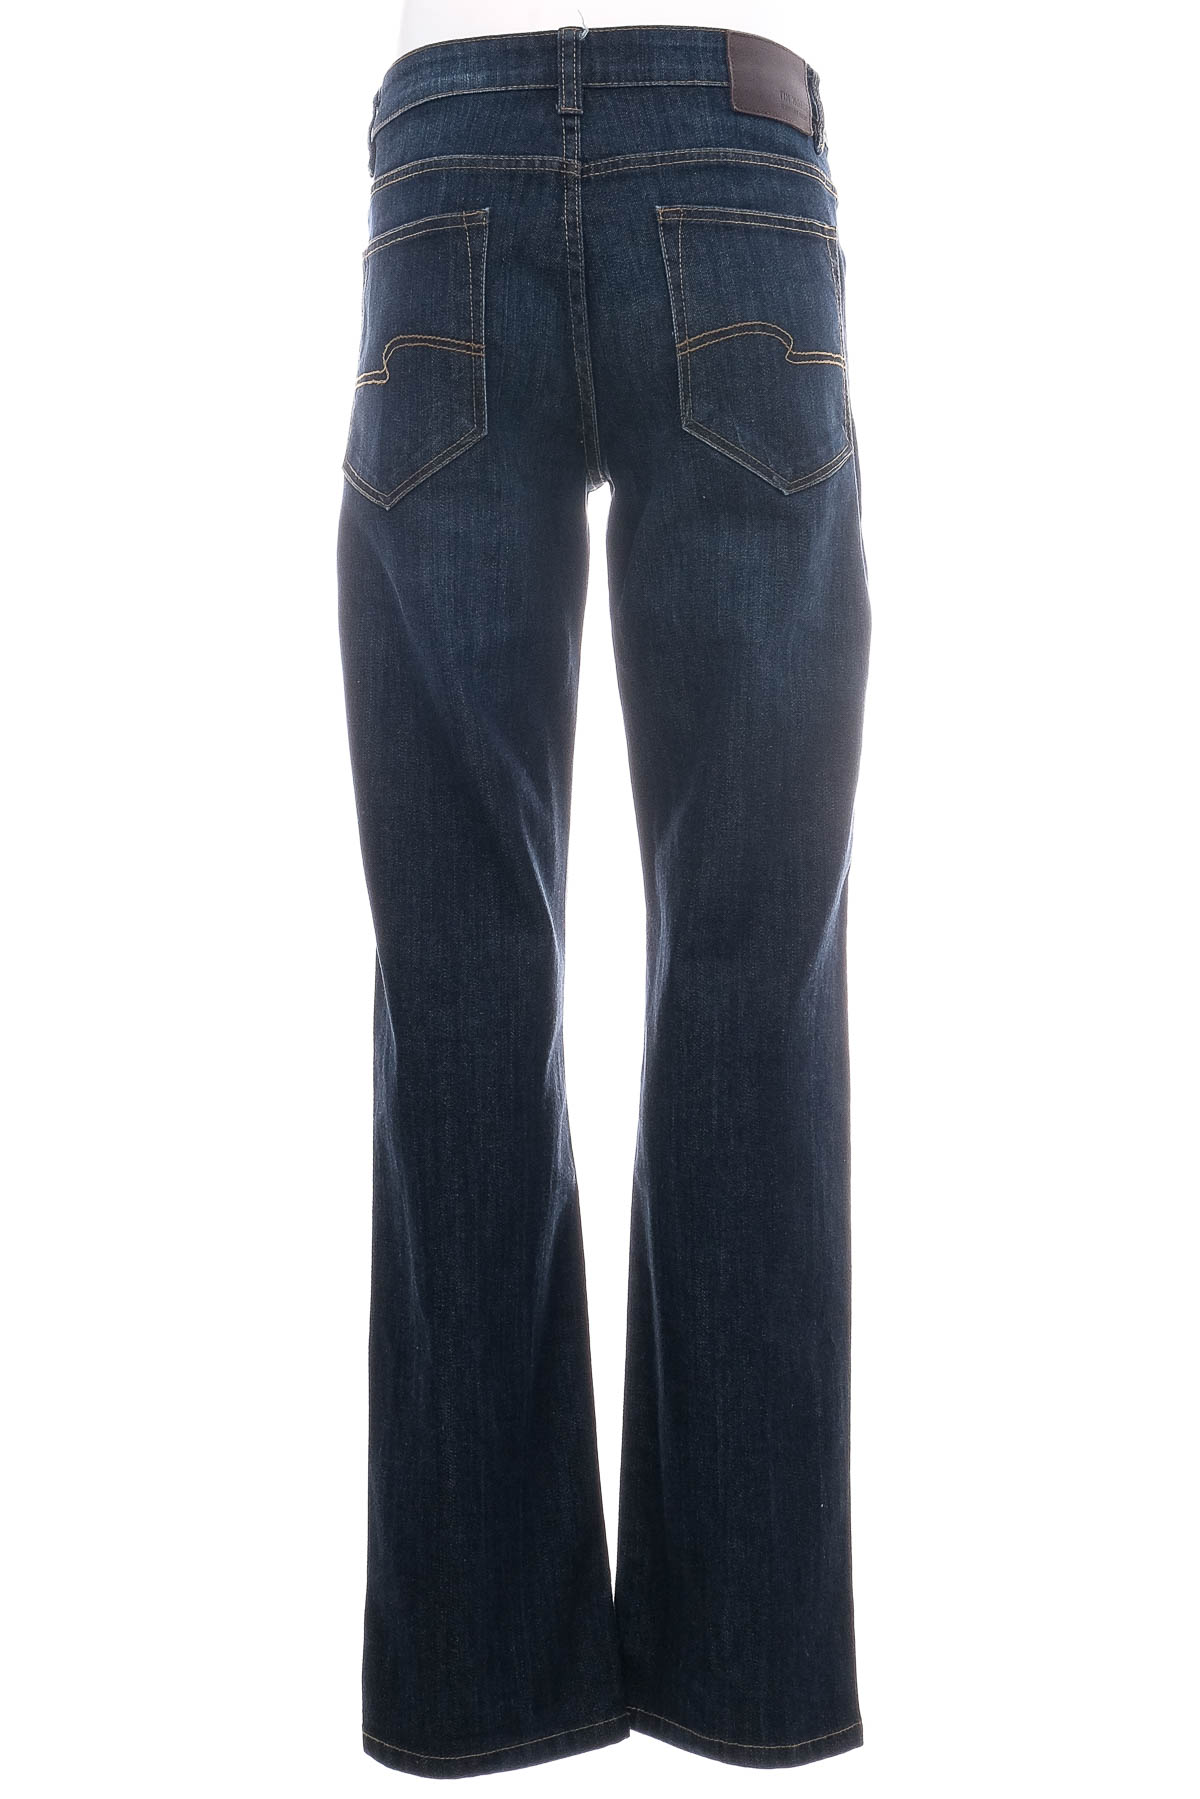 Men's jeans - TIM MOORE - 1